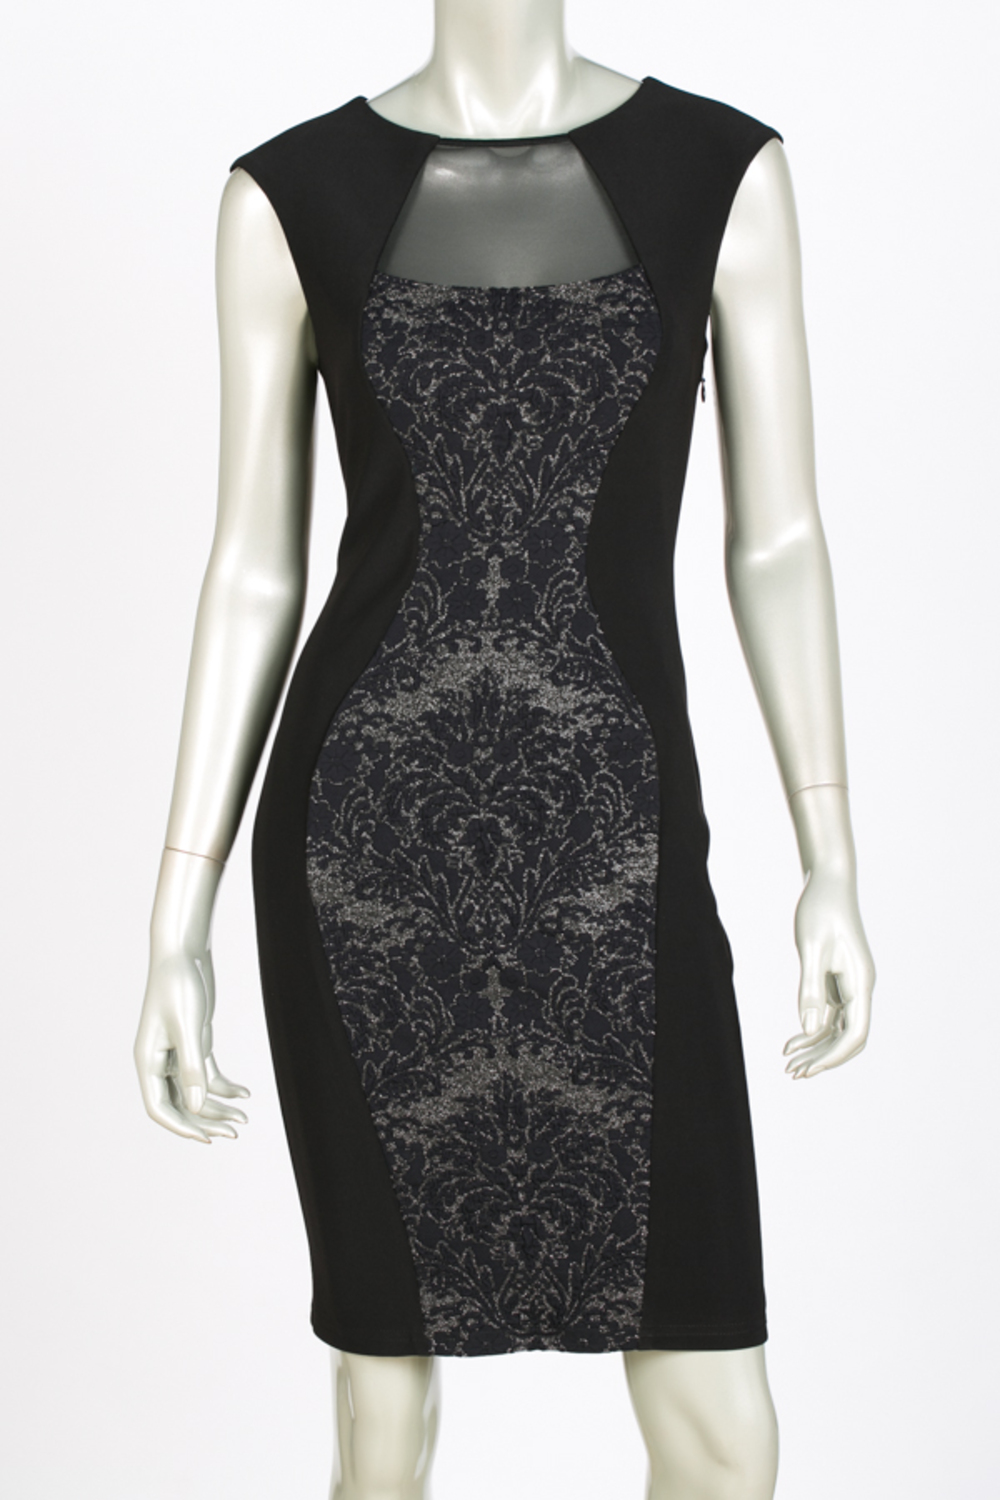 Joseph Ribkoff dress style 144892. Black/black